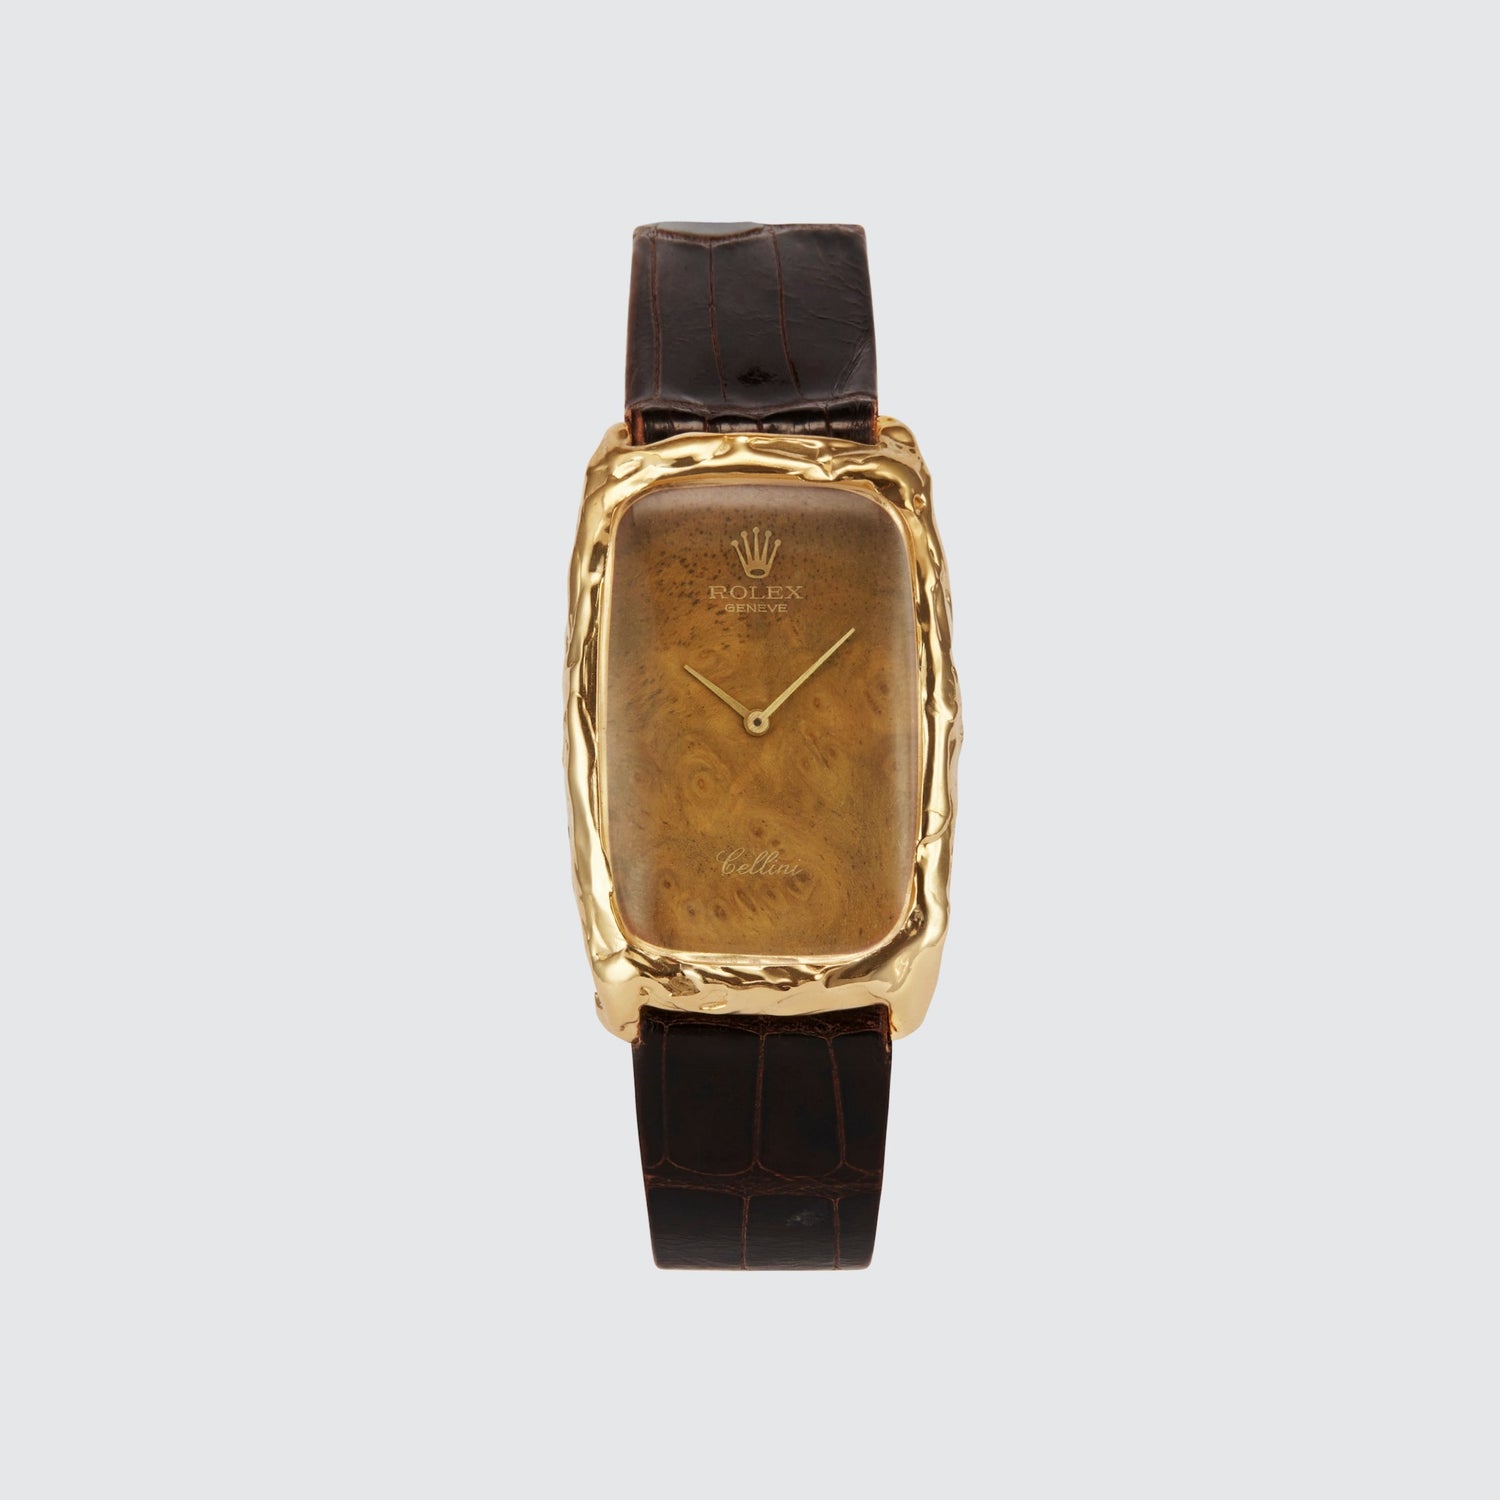 Customised Vintage Rolex King Cellini Watch